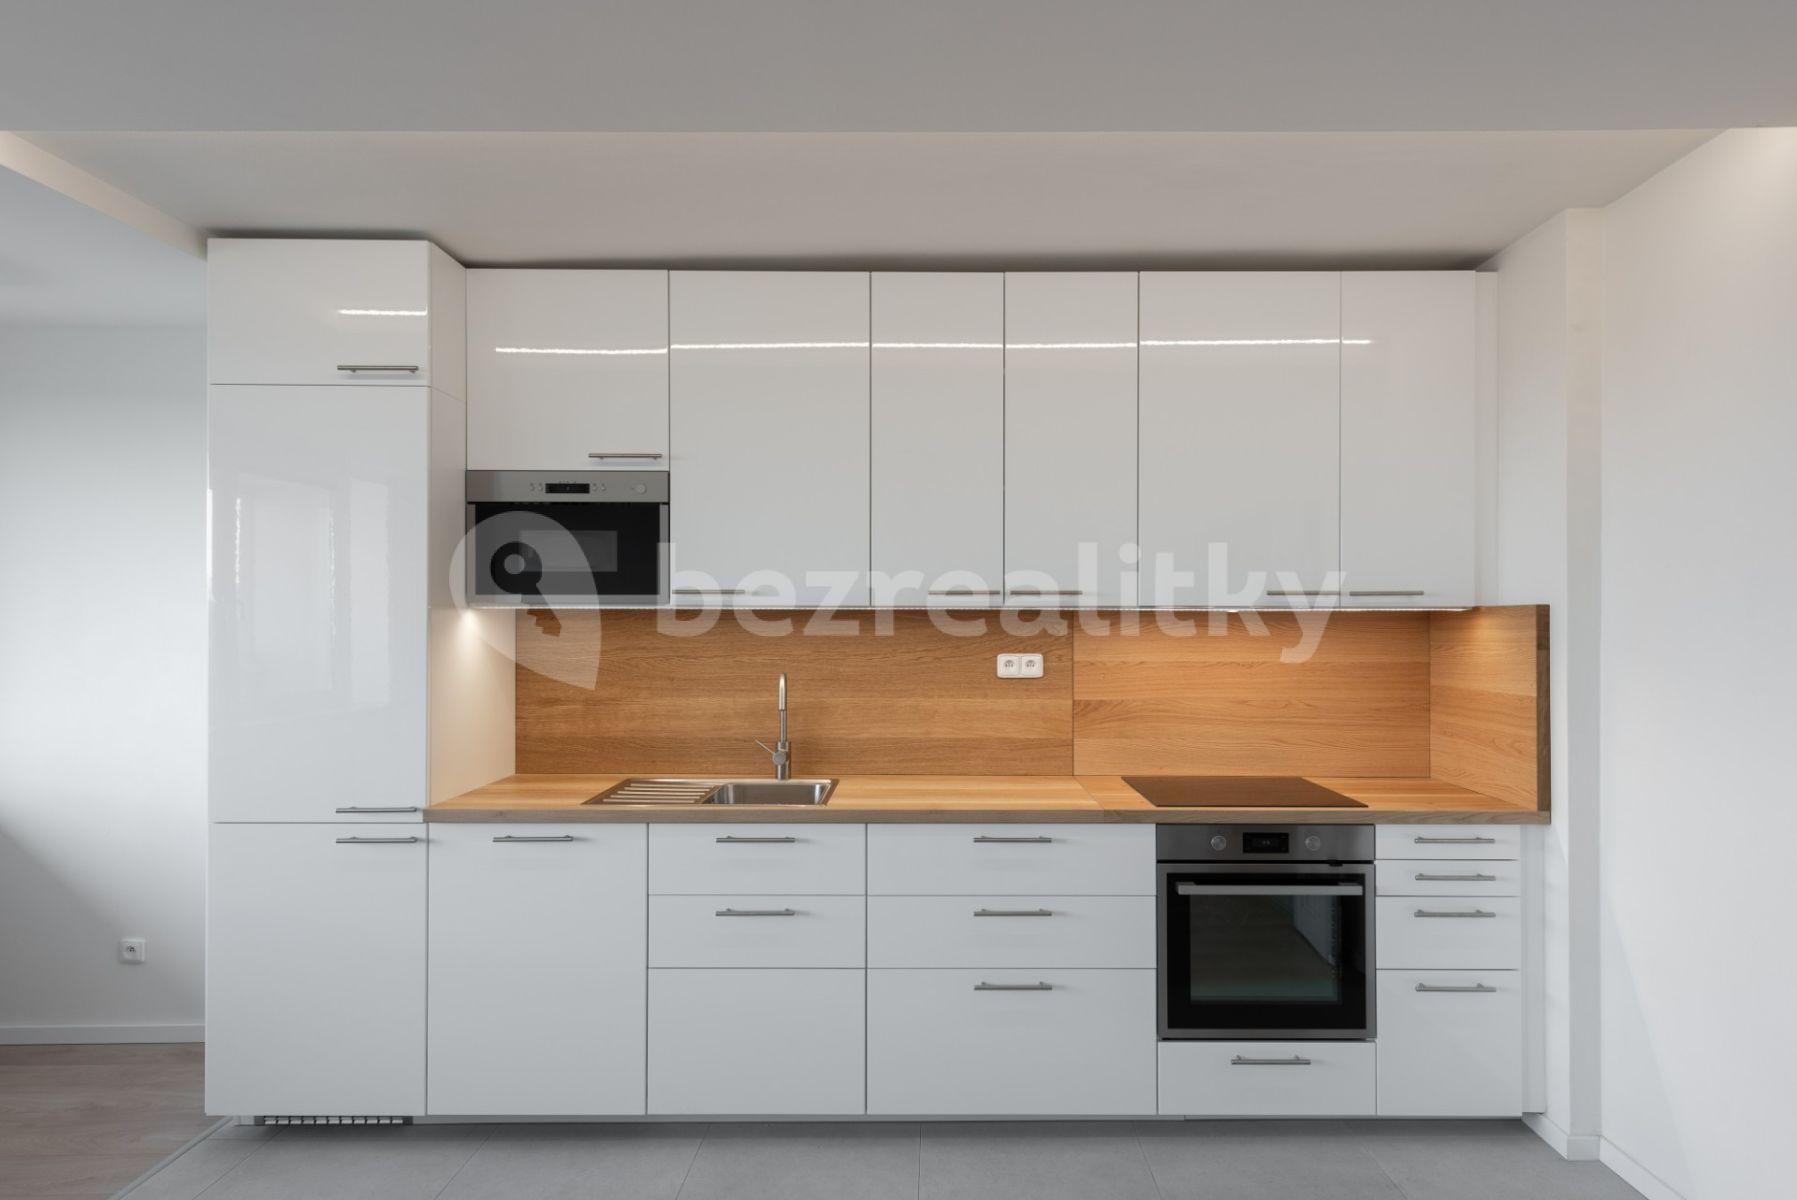 2 bedroom with open-plan kitchen flat for sale, 80 m², Dunická, Prague, Prague